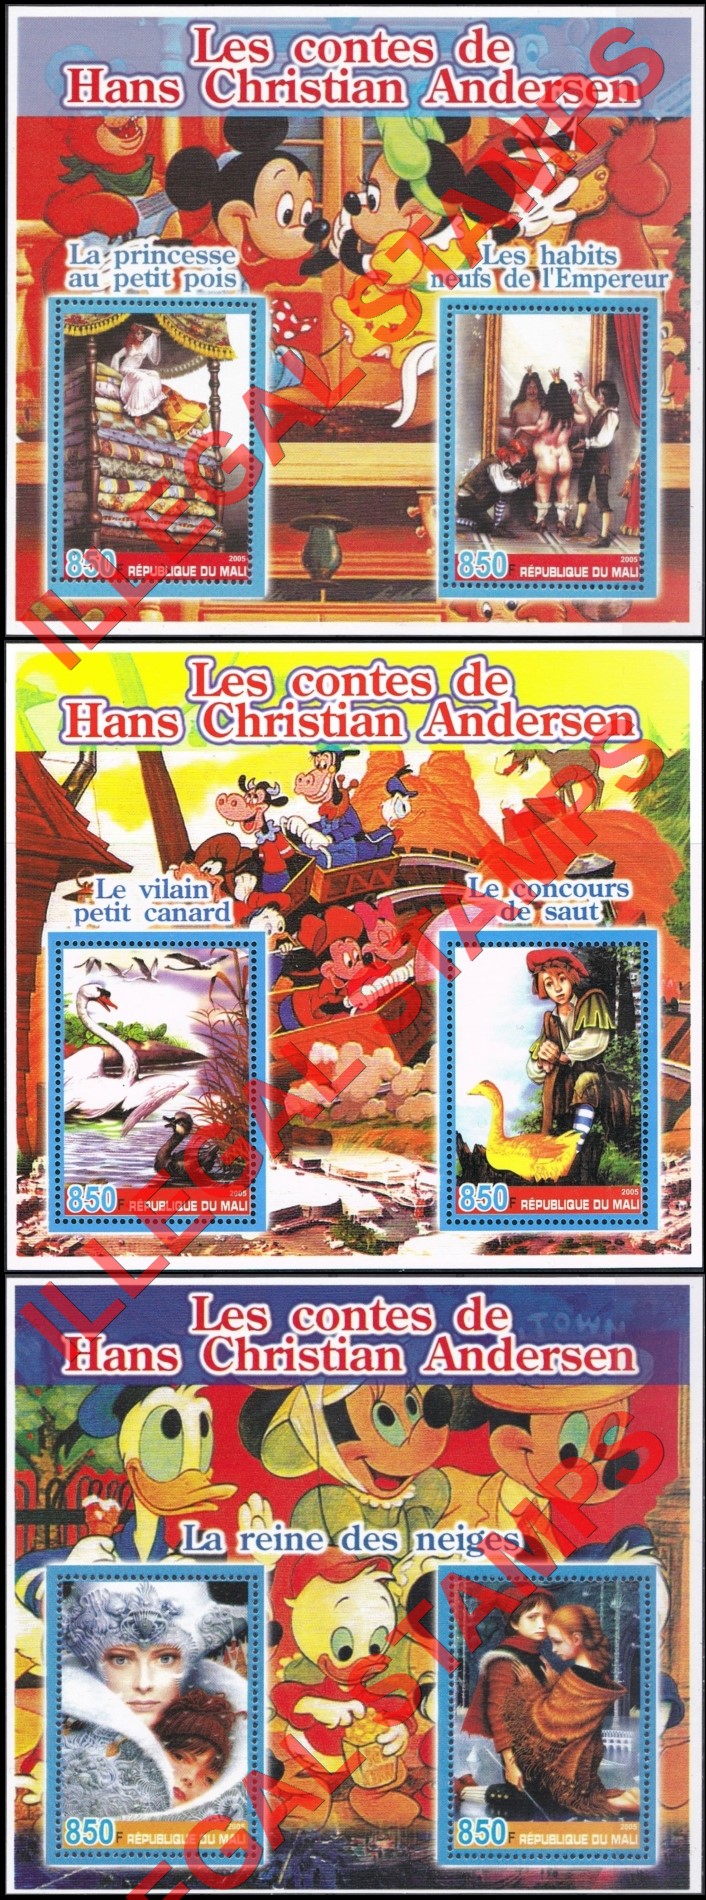 Mali 2005 Disney Hans Christian Andersen Illegal Stamp Souvenir Sheets of 2